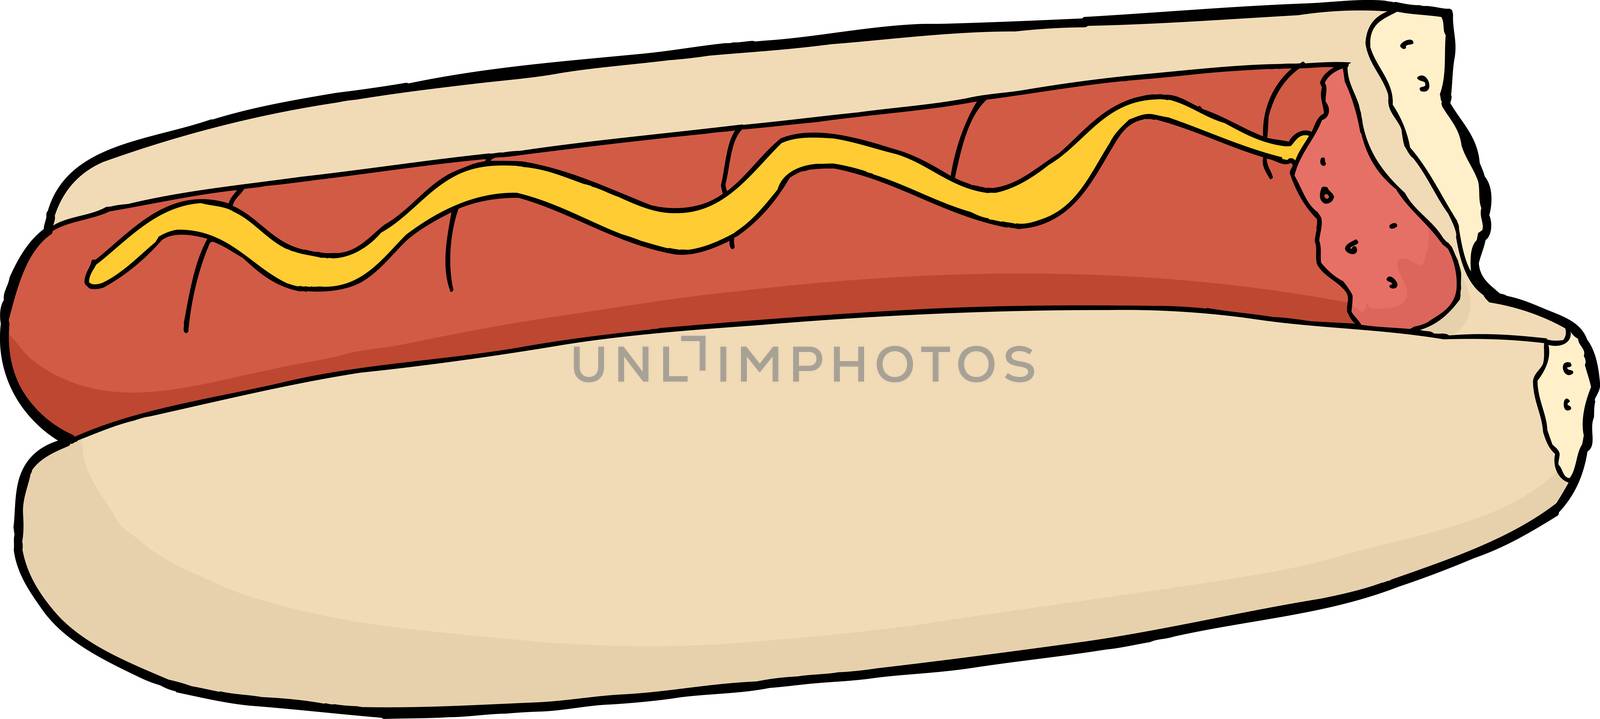 Bitten Hot Dog by TheBlackRhino